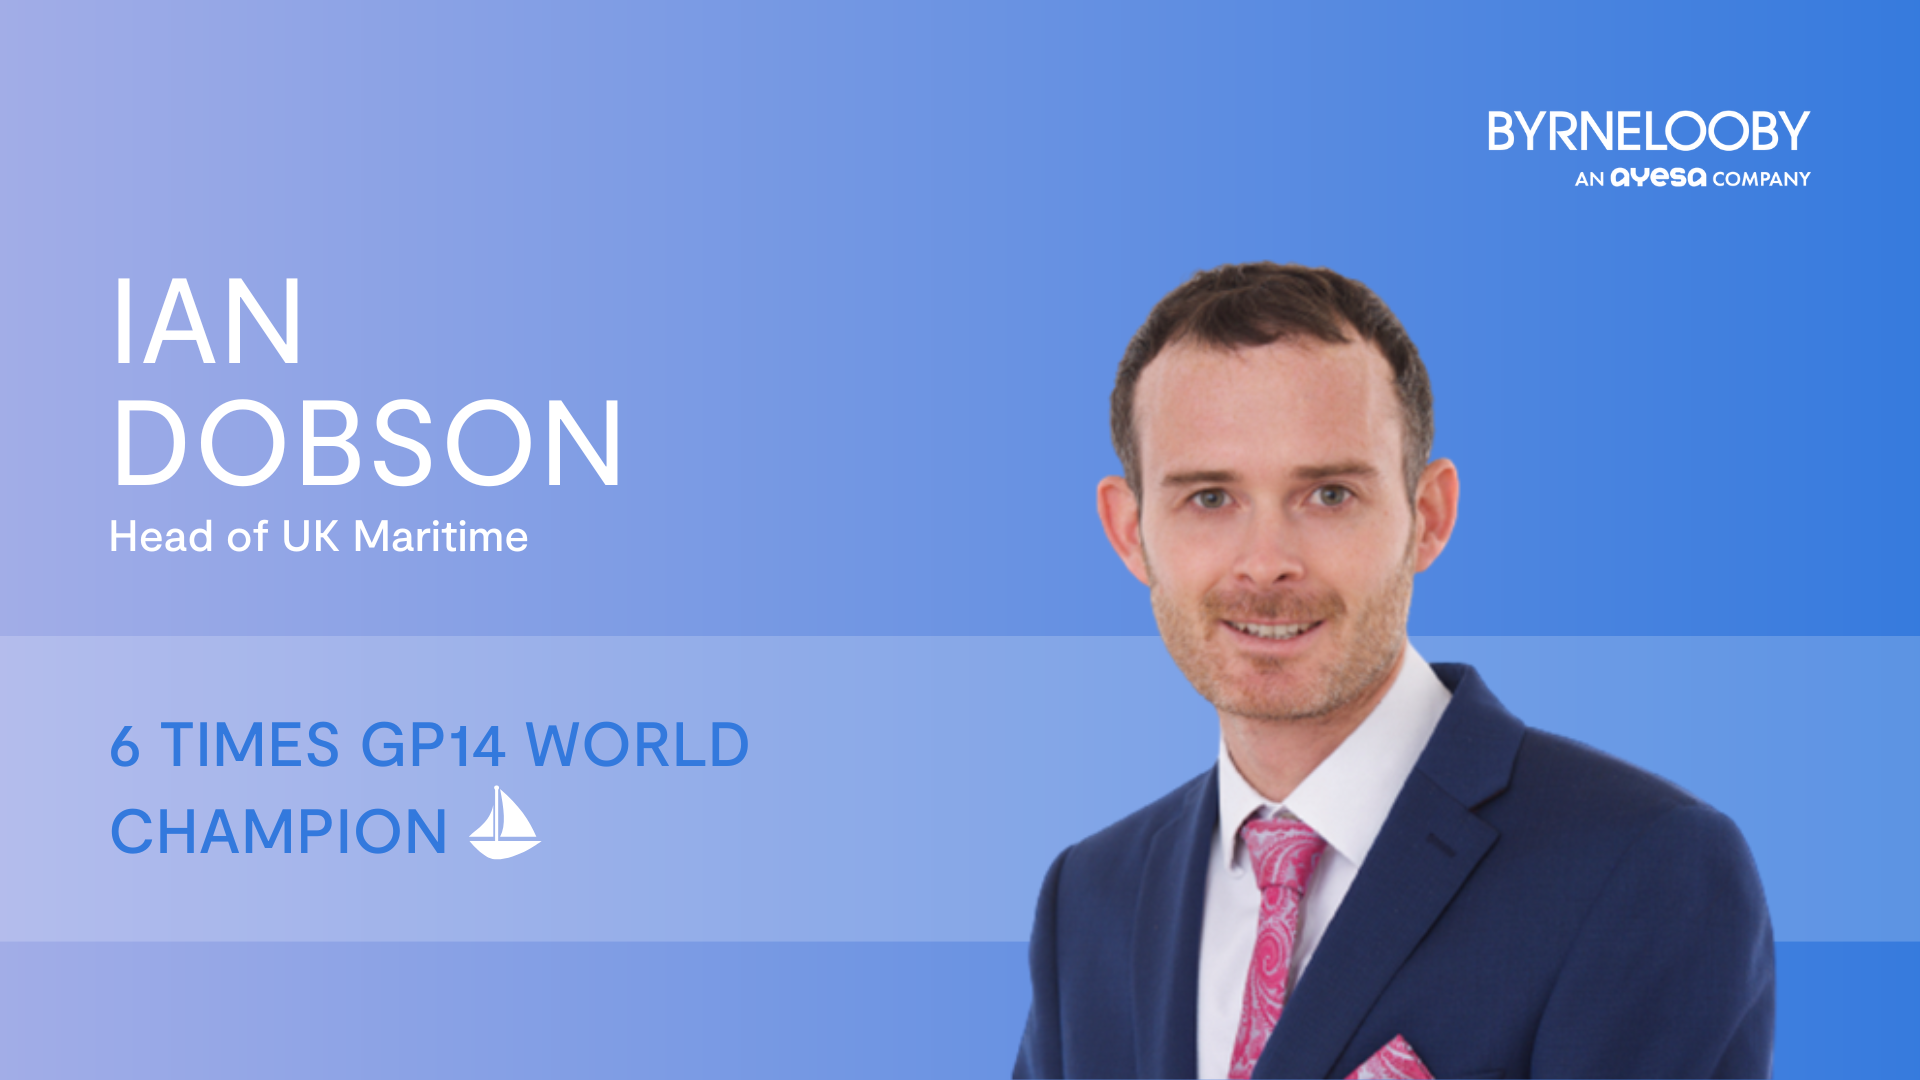 Meet Ian Dobson - Head of UK Maritime